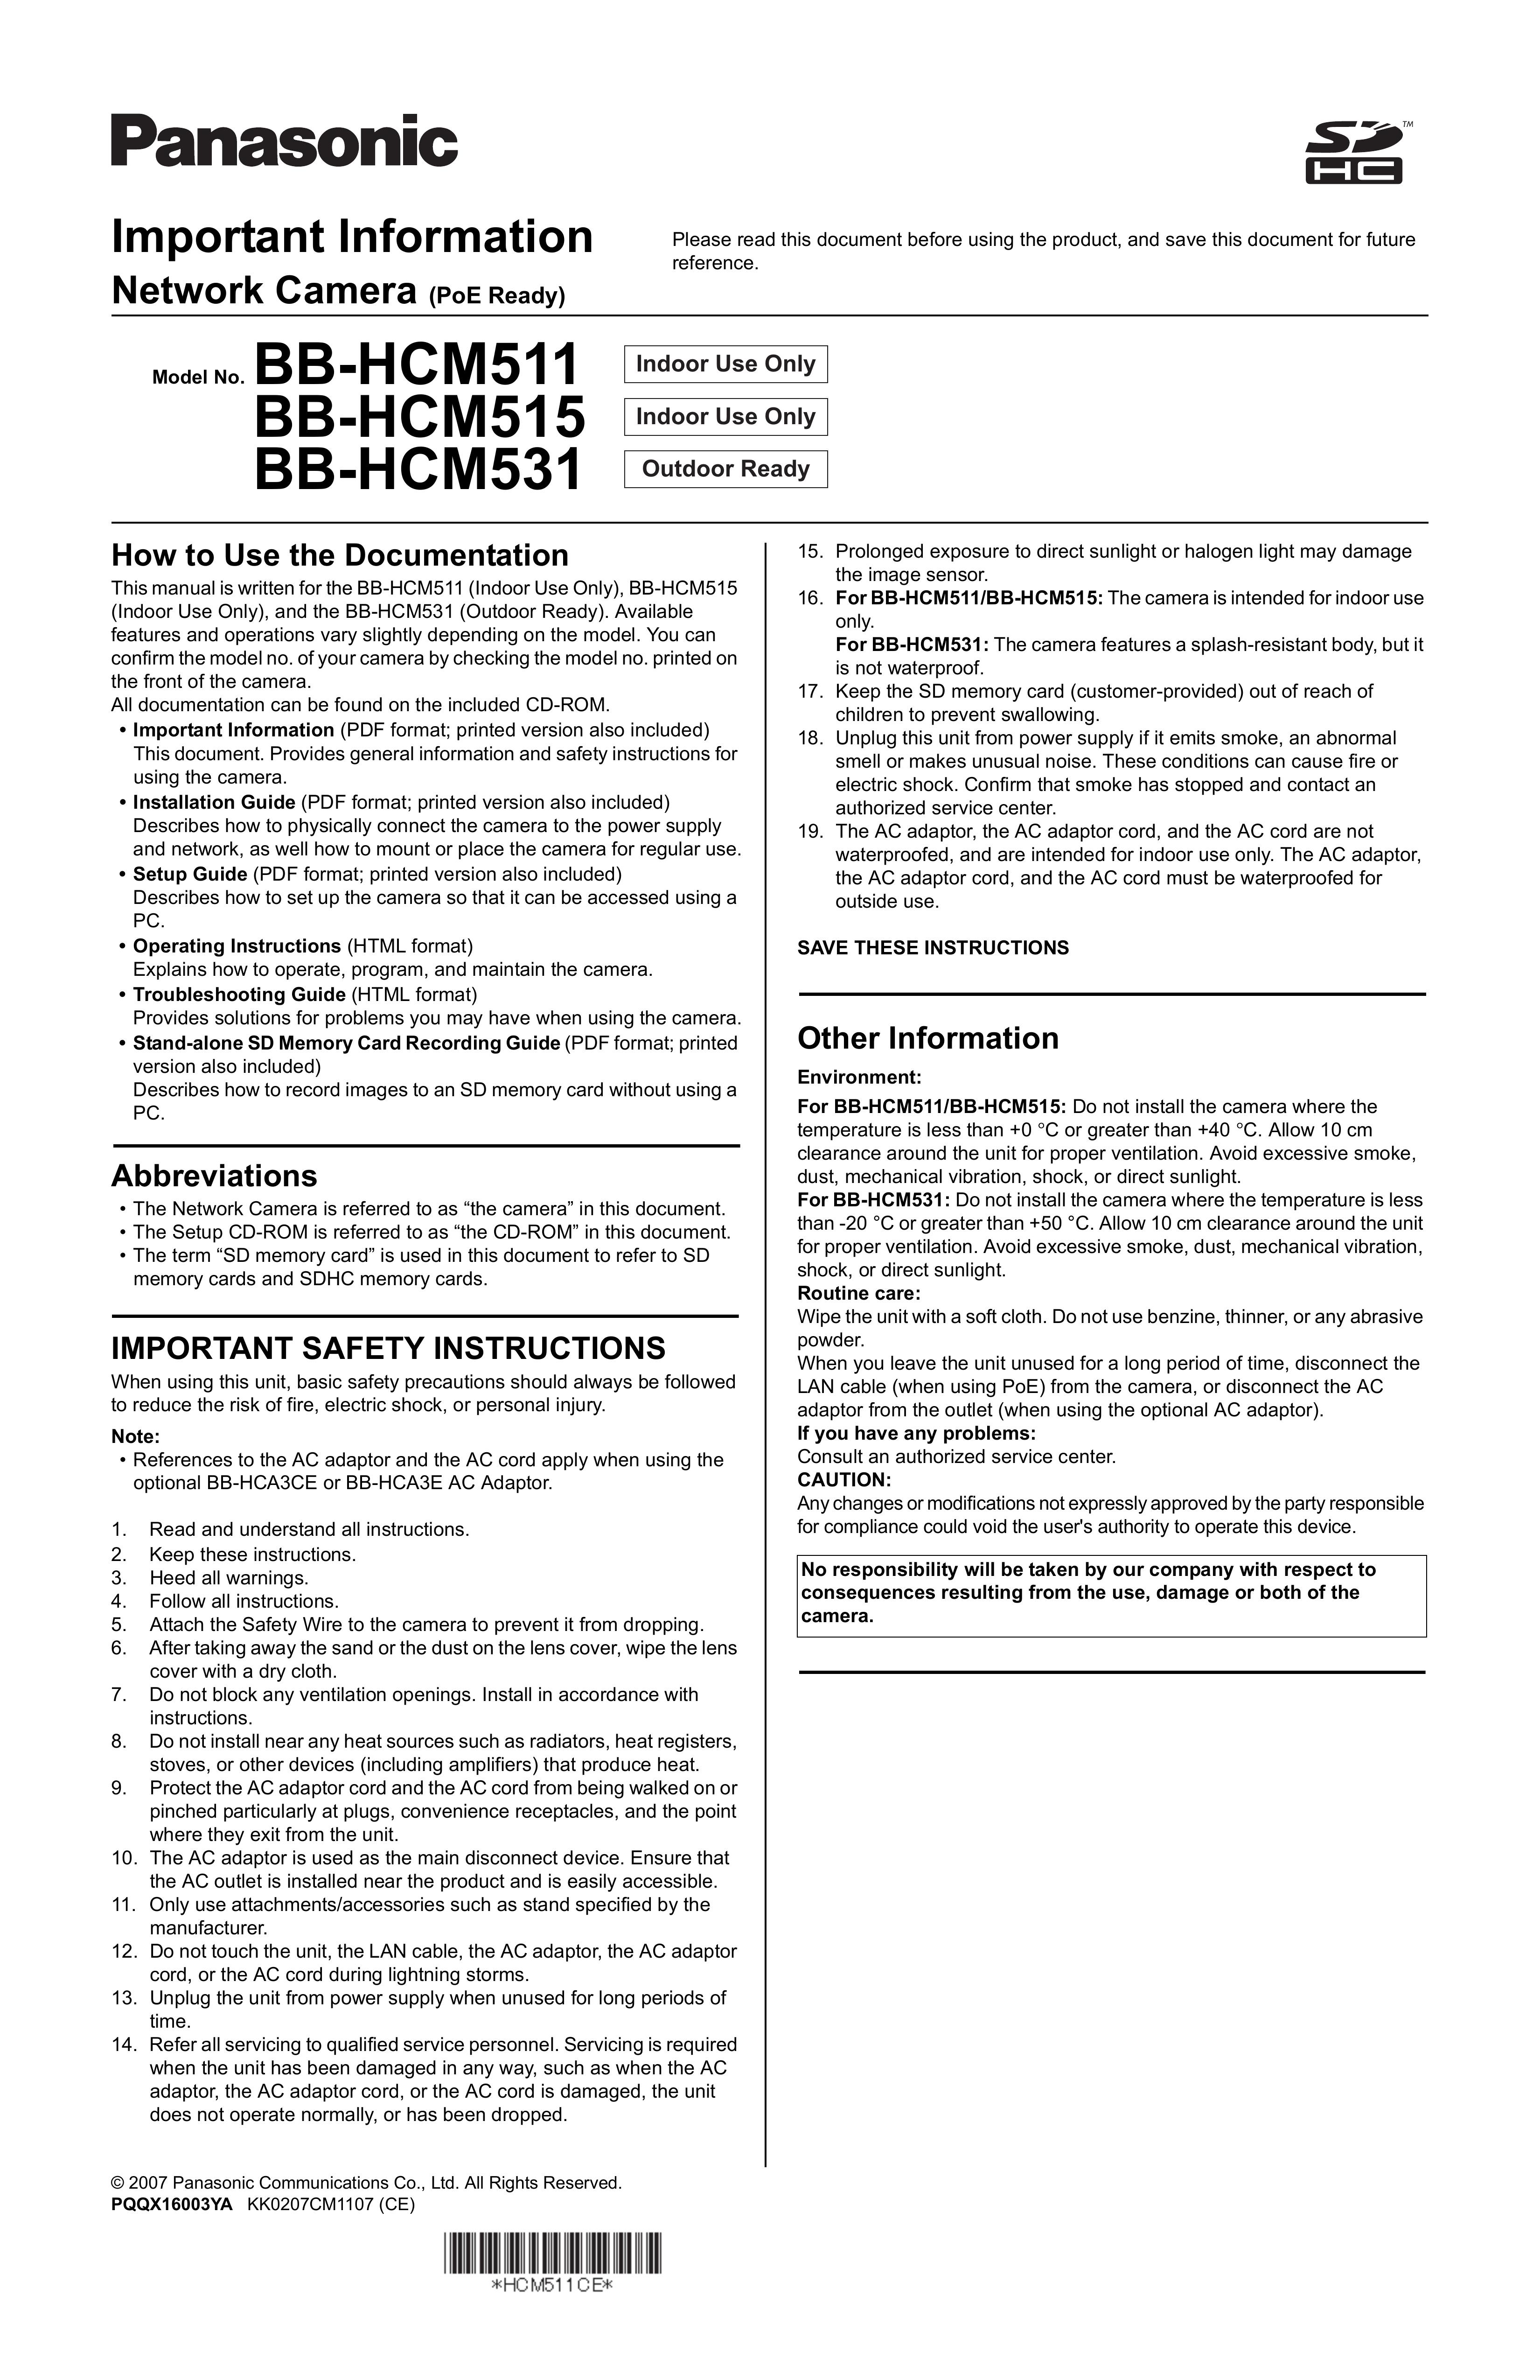 Panasonic BB-HCM515 Security Camera User Manual